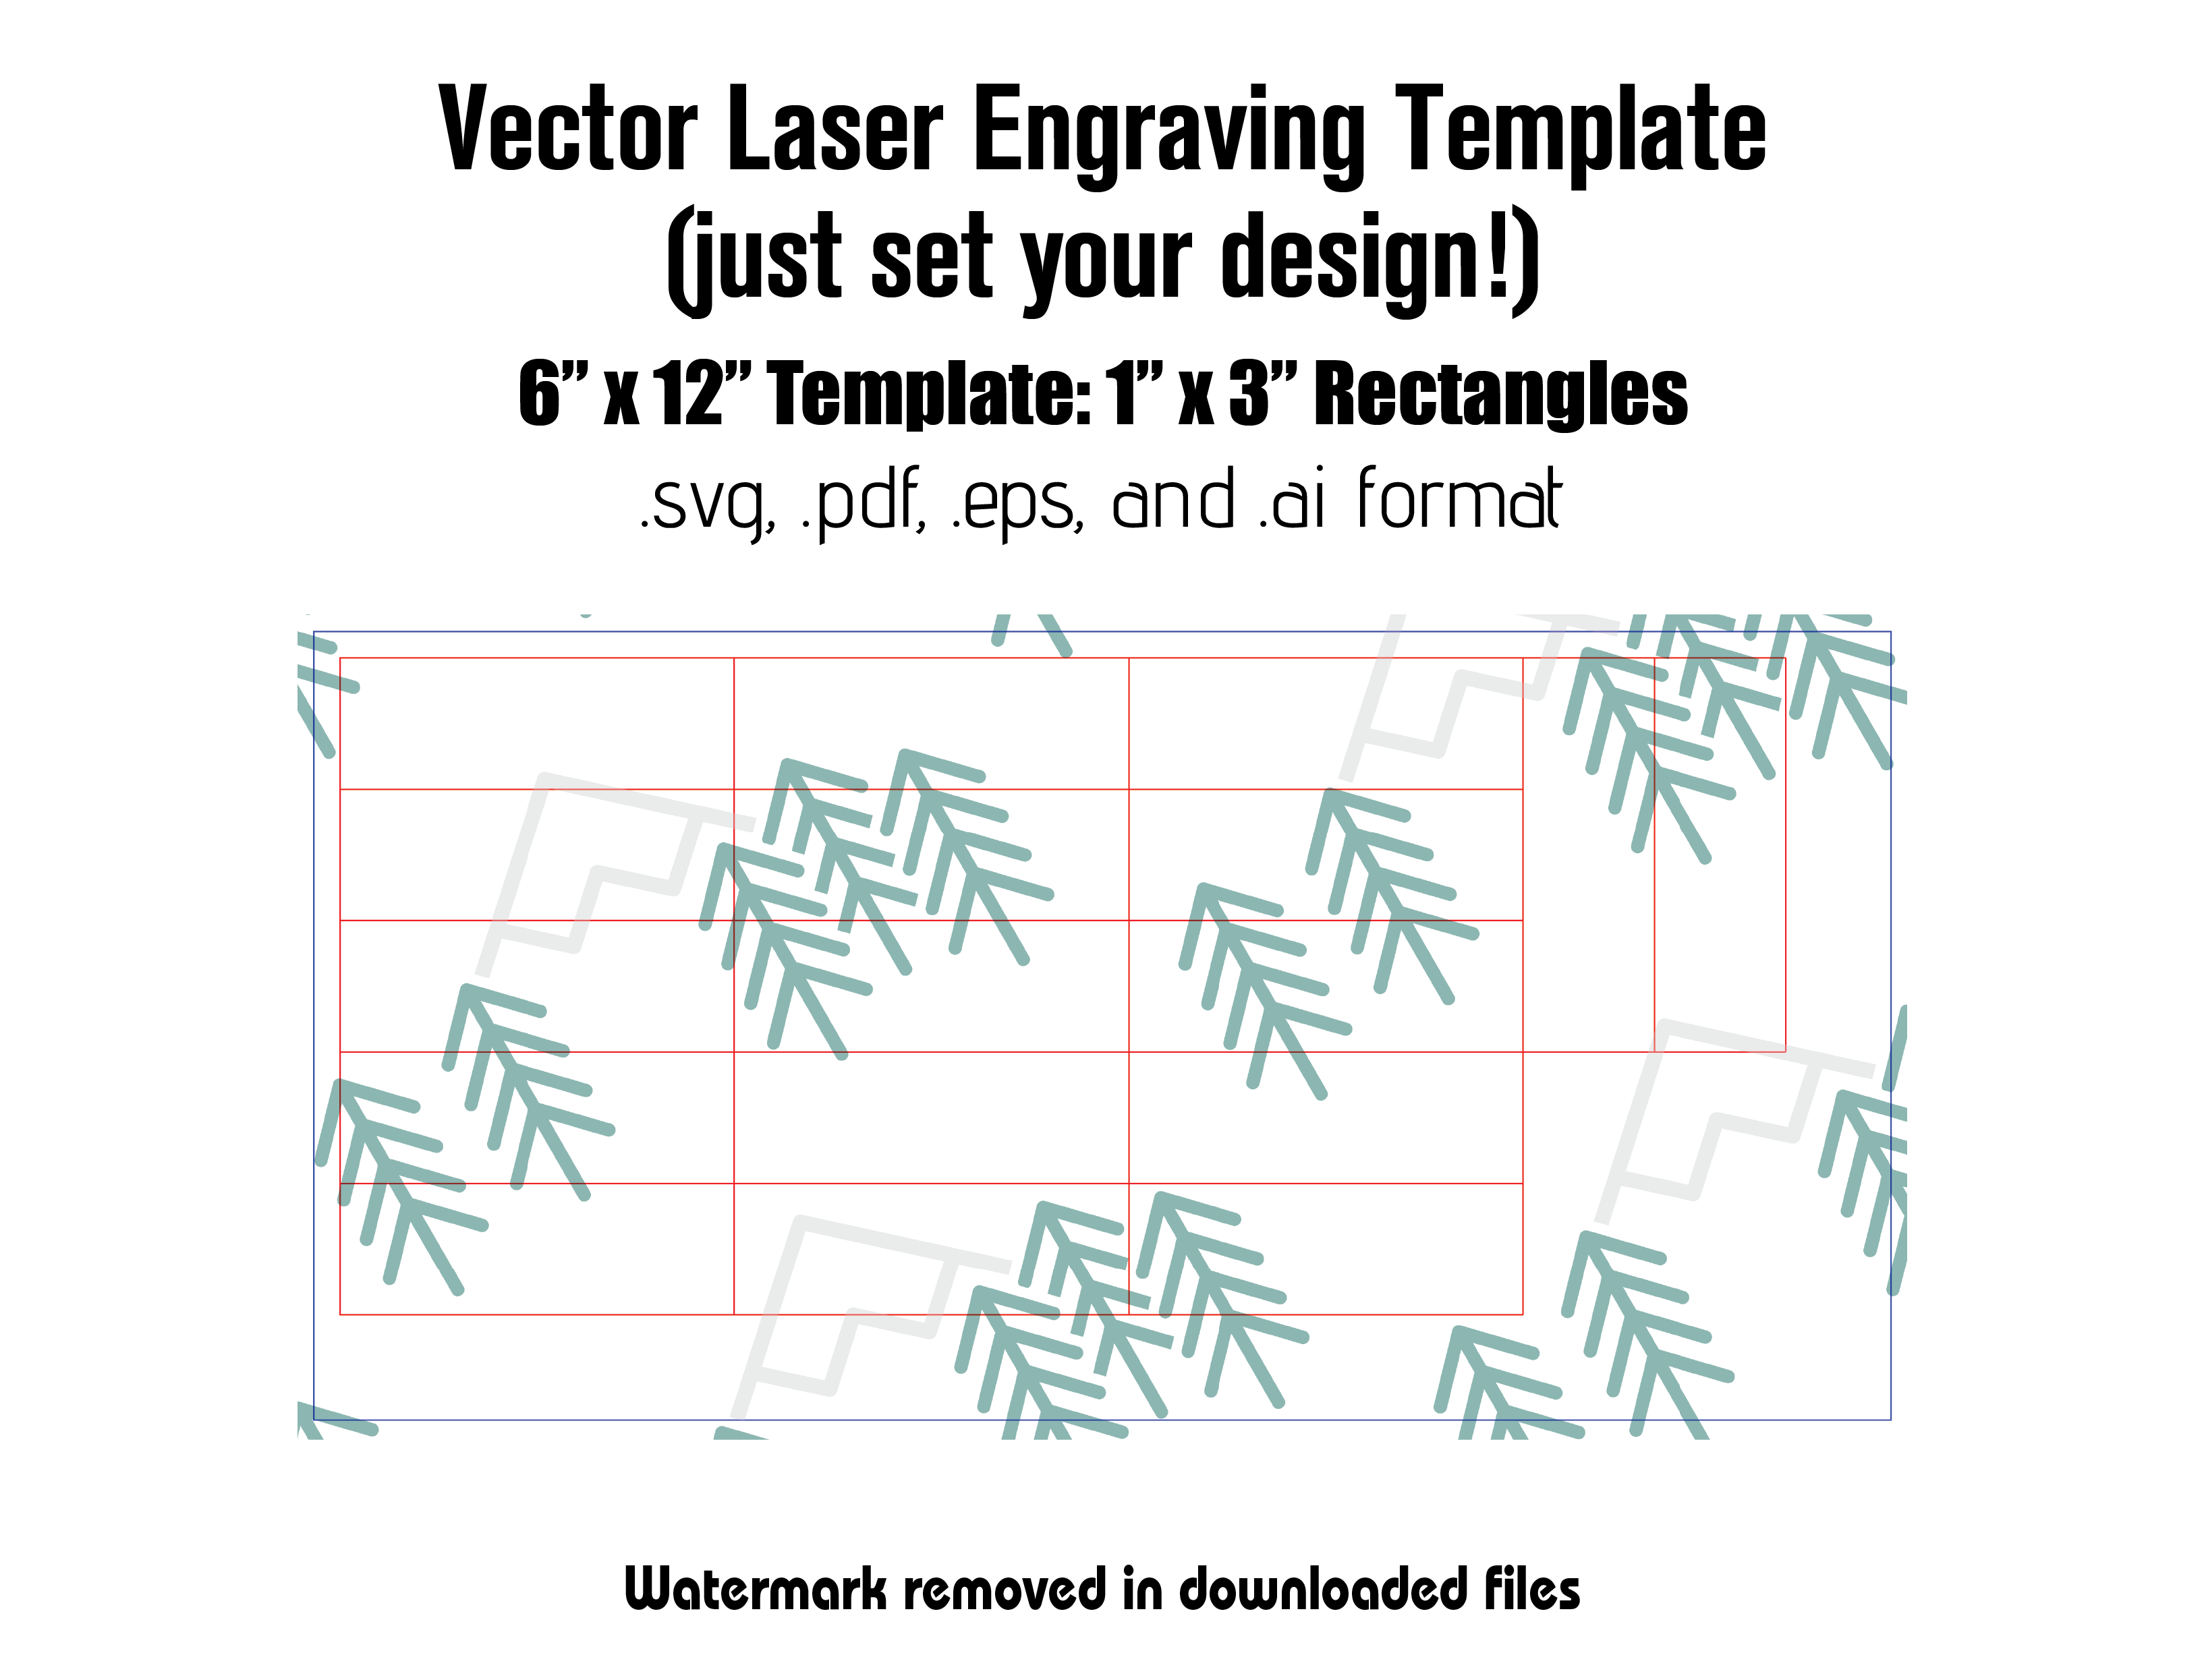 Digital Laser Cutting Template: 1" x 3" Rectangles - 6" x 12" Sheet Size Digital Laser Engraving Files Craftworks NW 